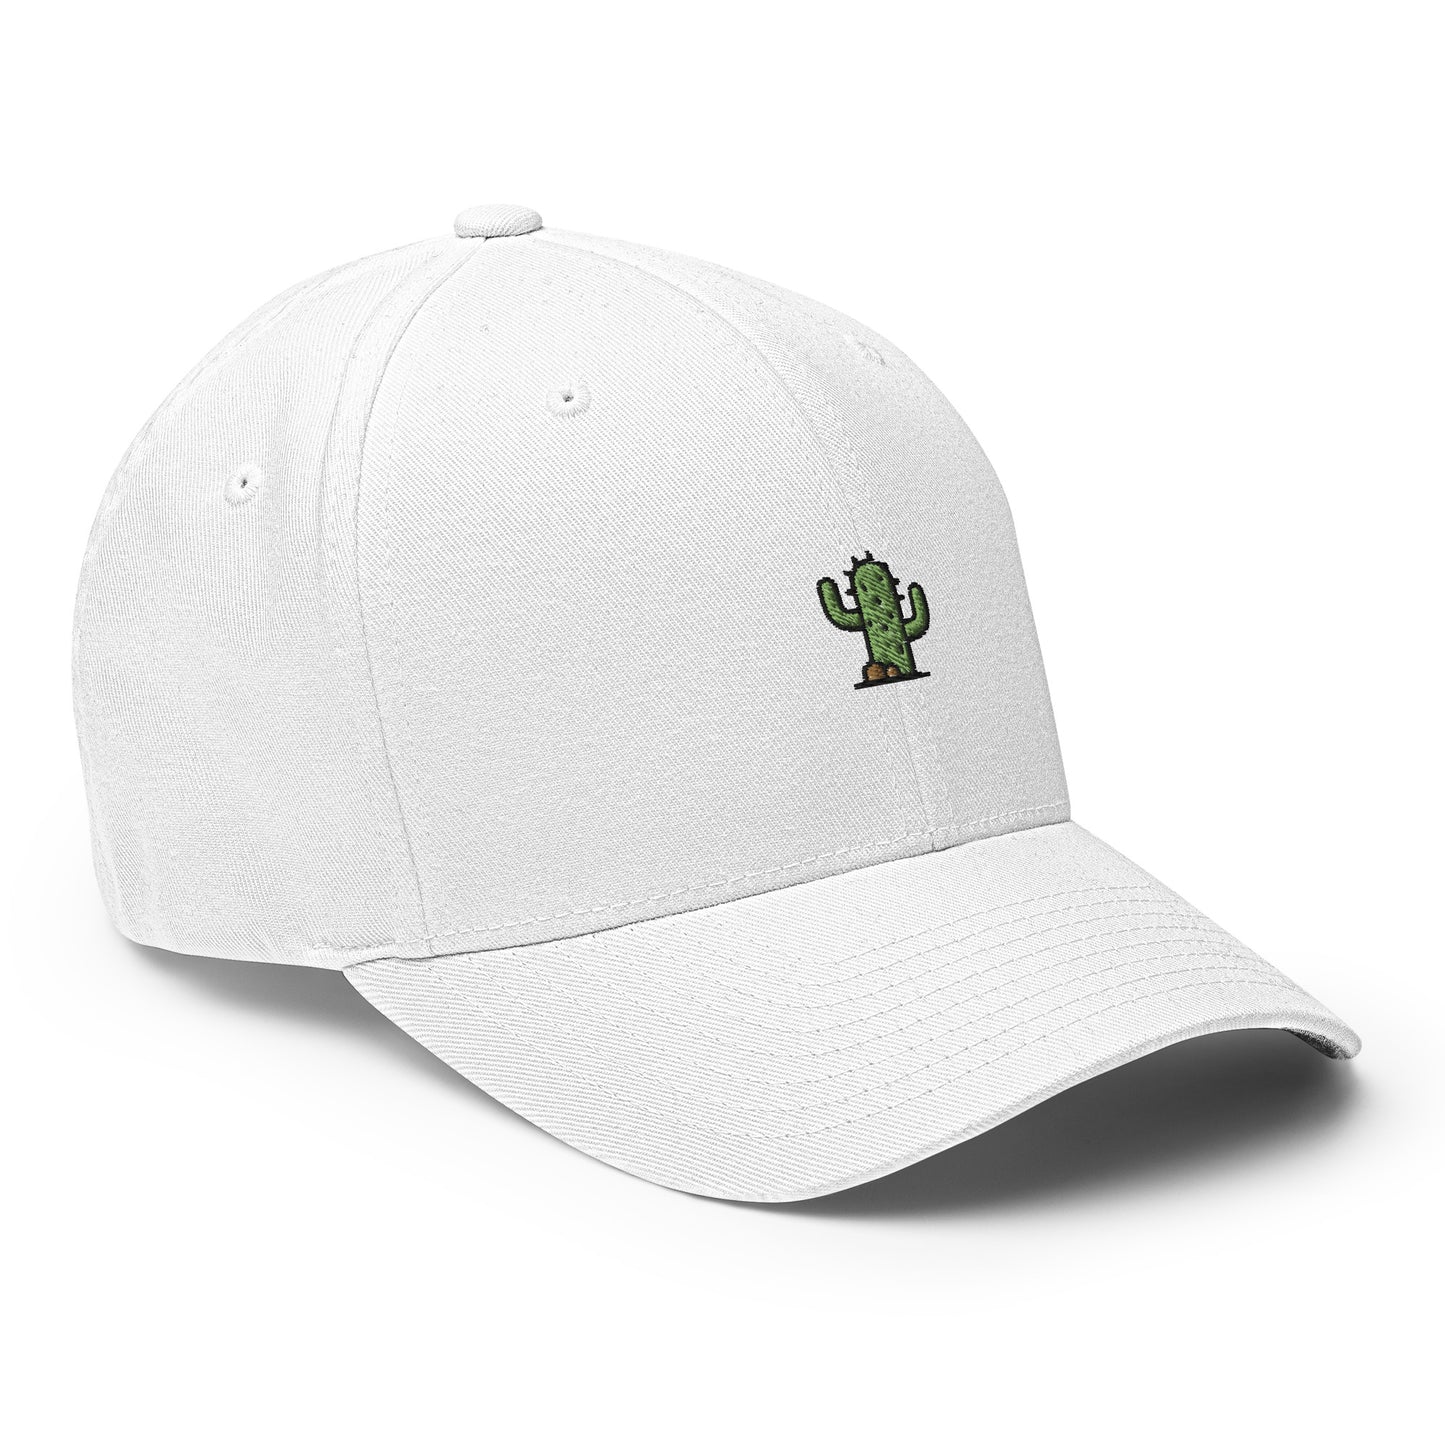 Baseball Cap with Cactus Symbol